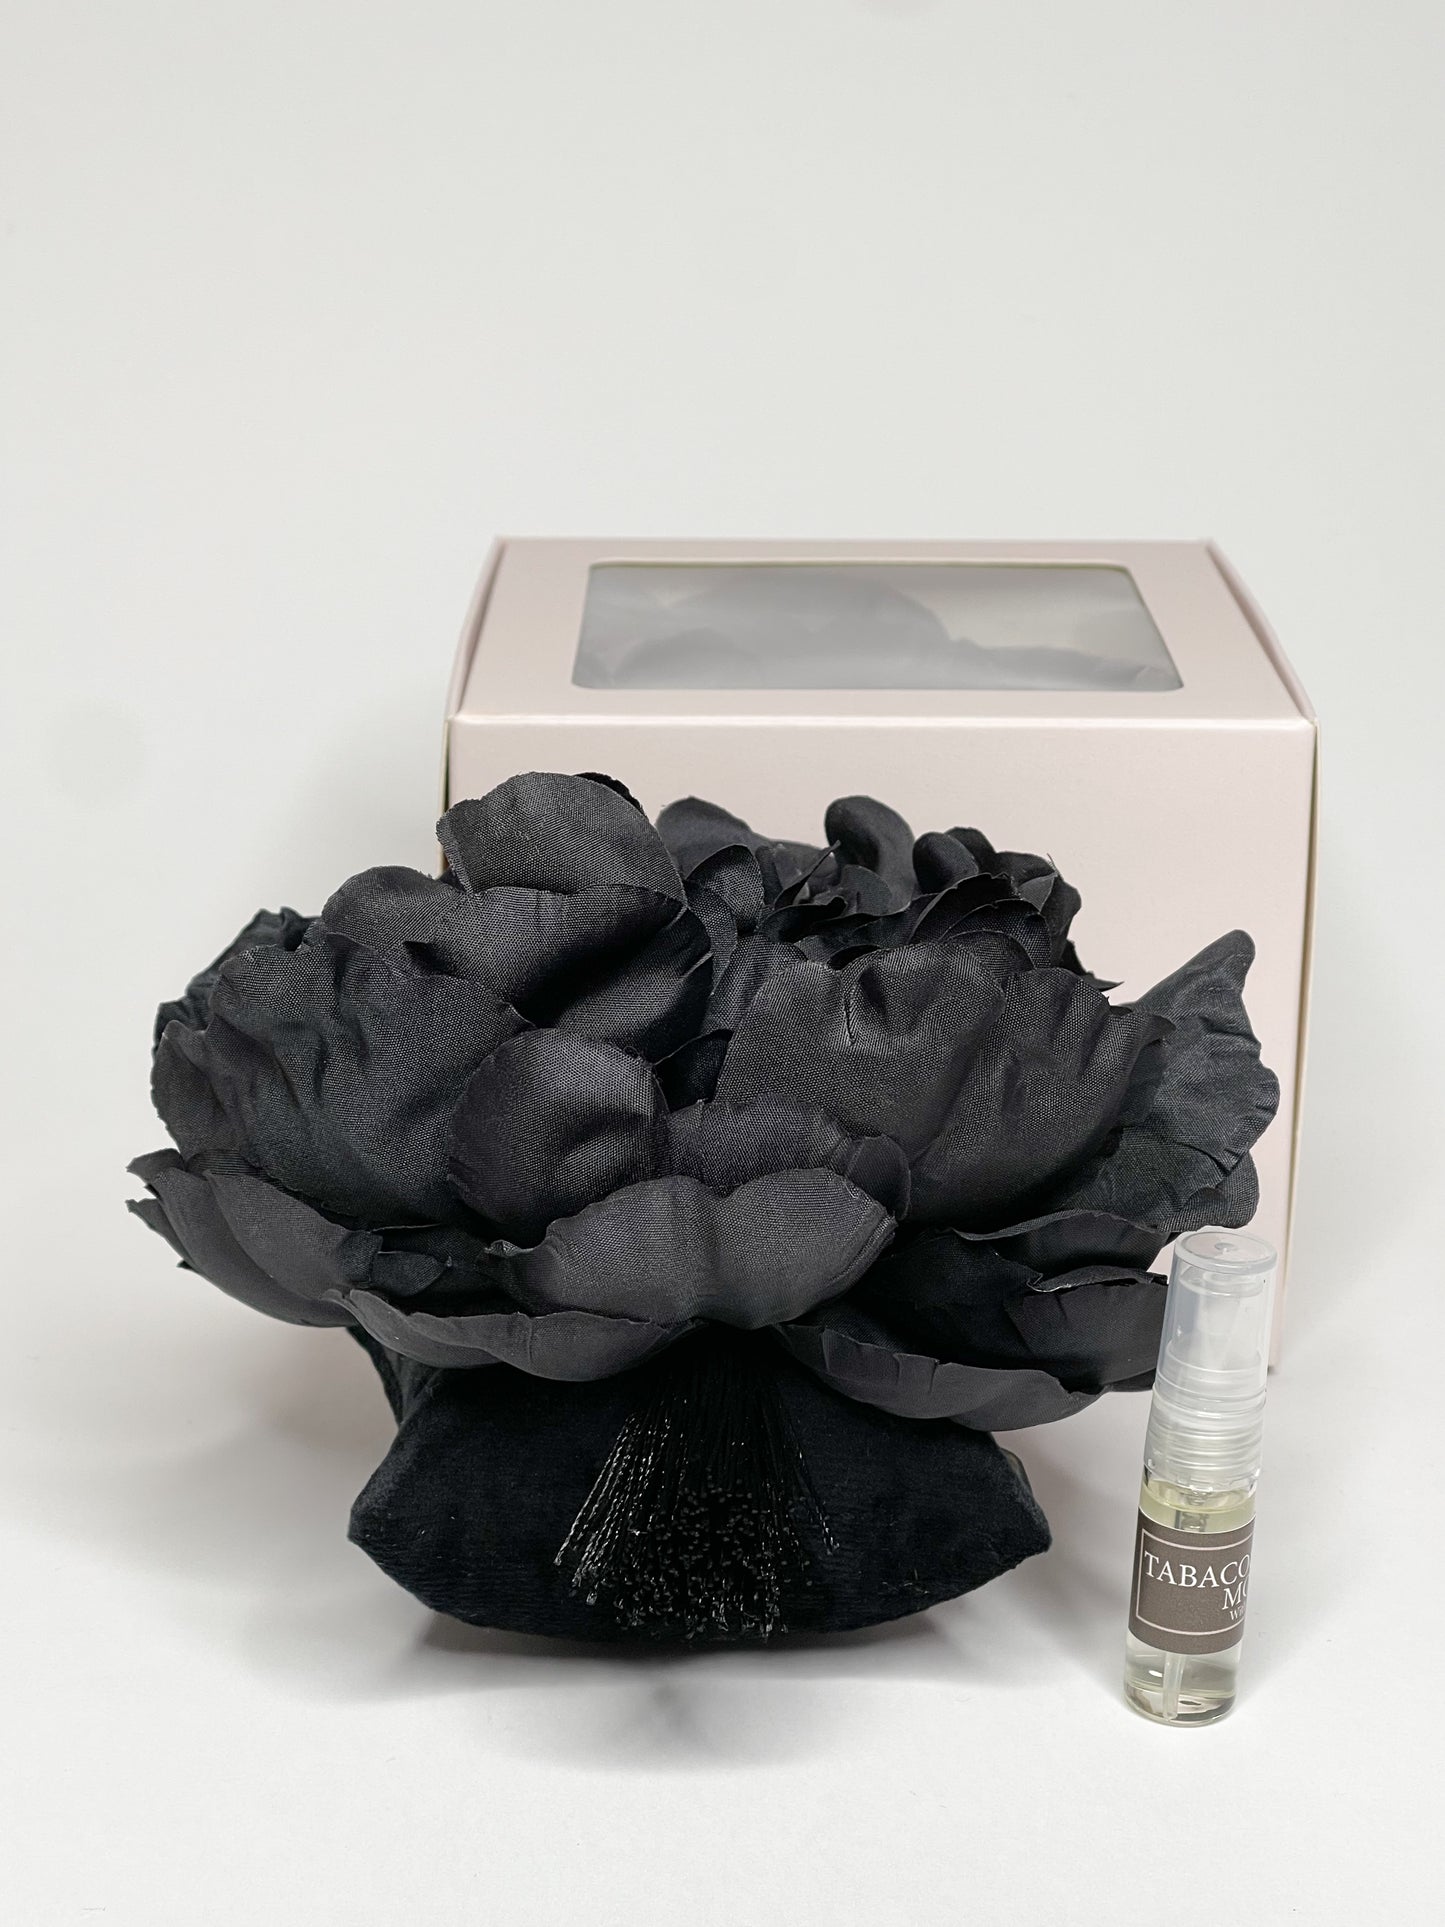 Home fragrance "Black peony"